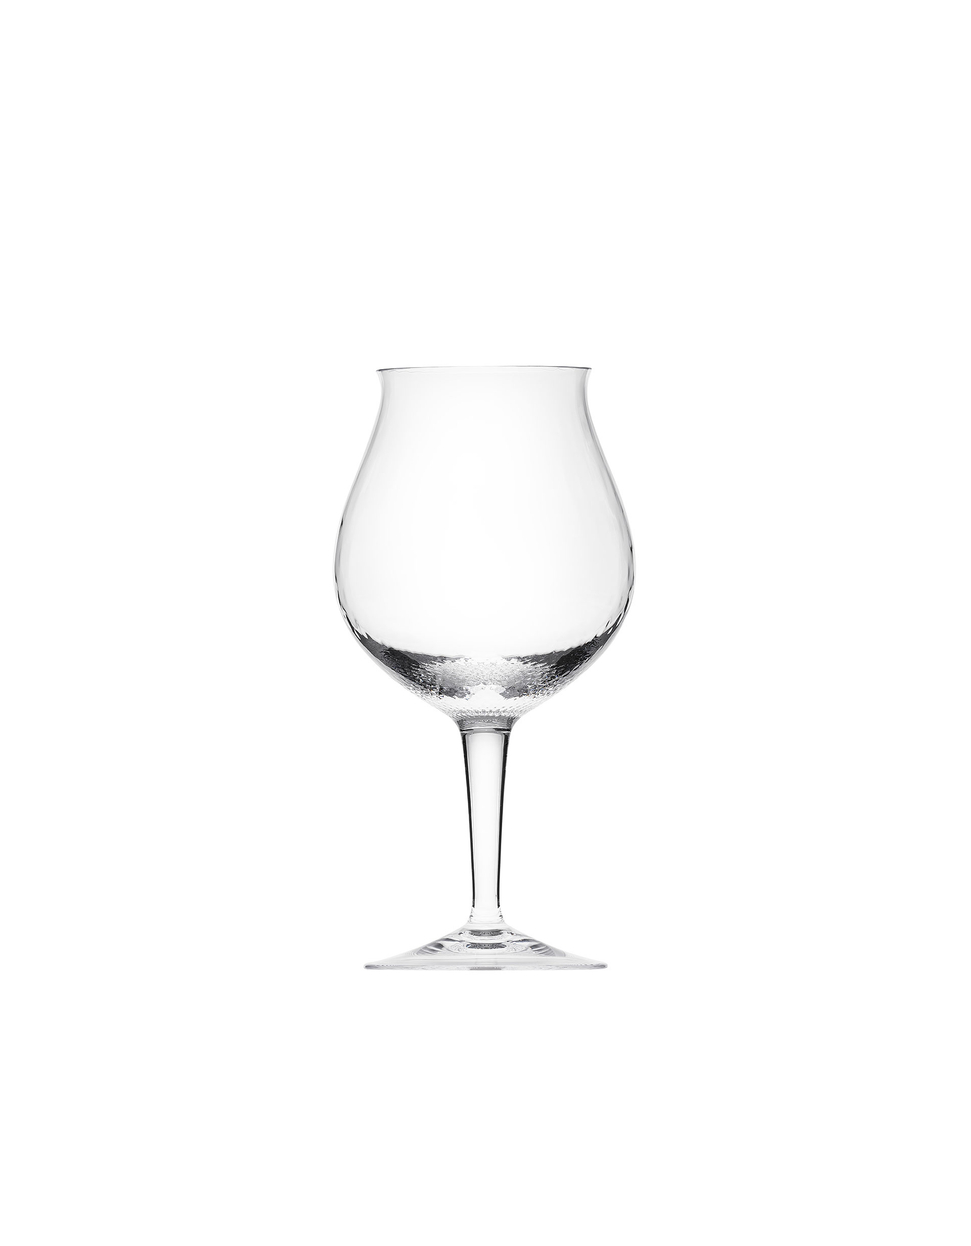 Wellenspiel wine glass, 640 ml